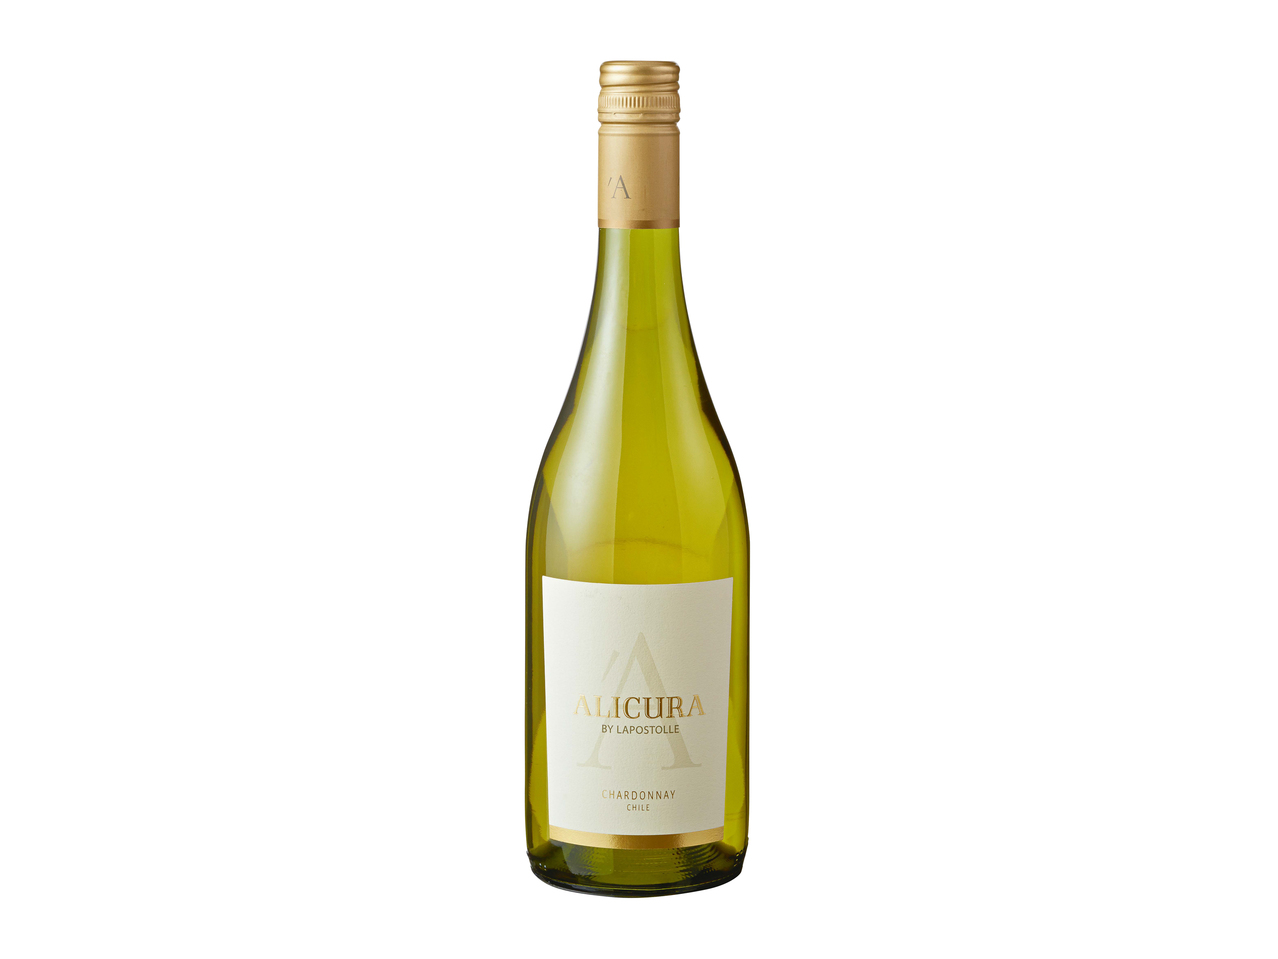 Alicura by Lapostolle Chardonnay 2016